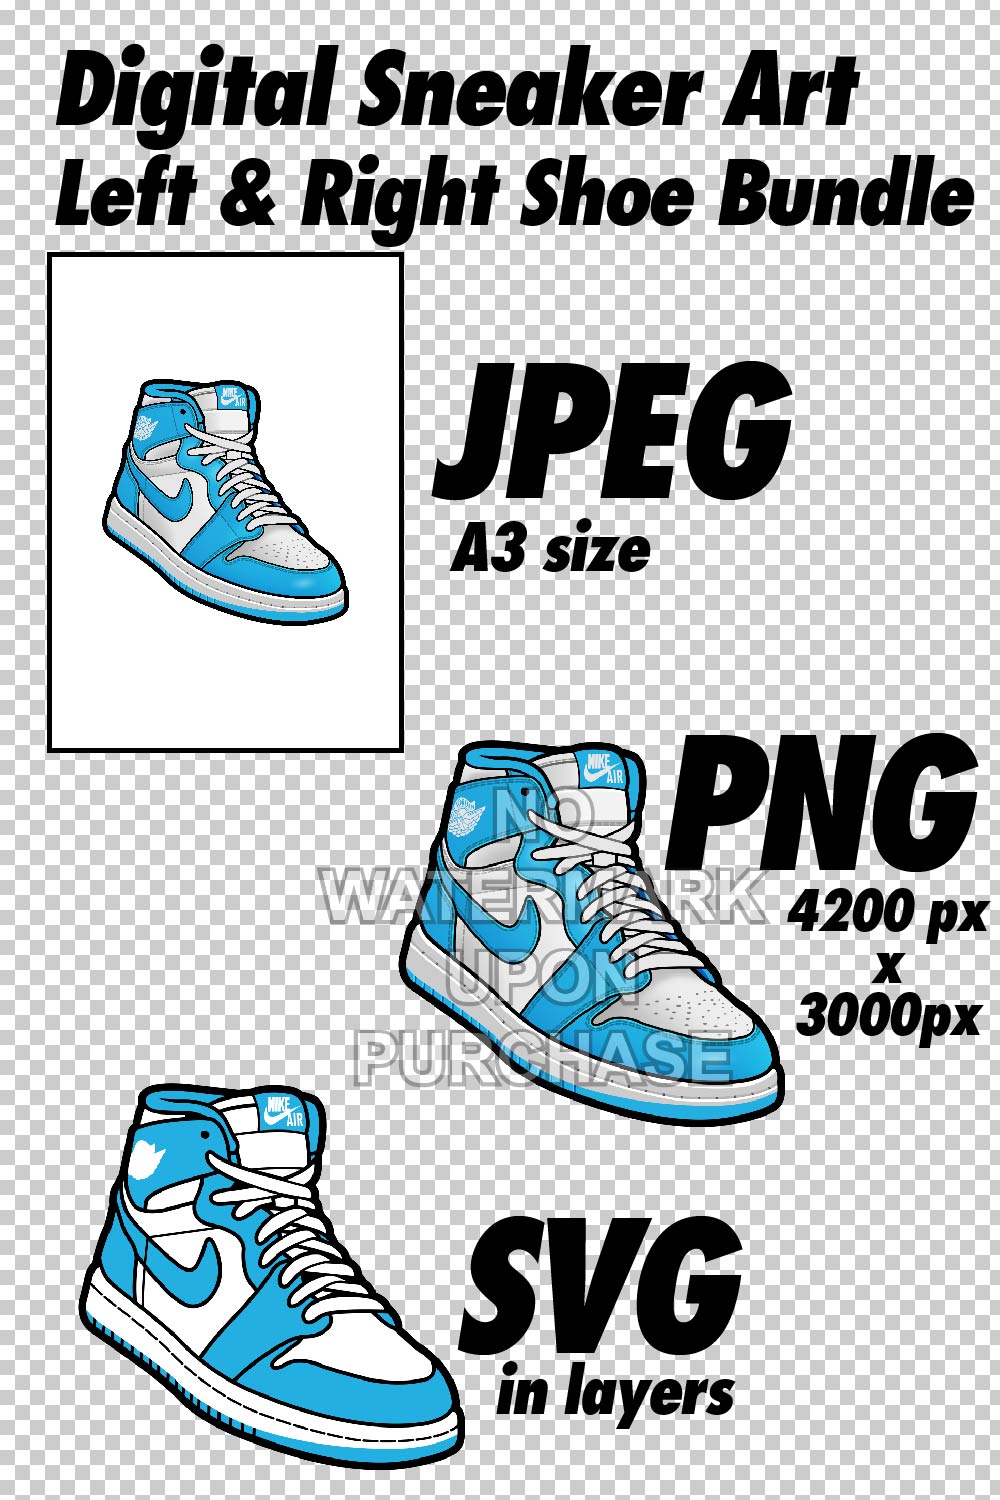 Air Jordan 1 UNC JPEG PNG SVG right & left shoe bundle Digital Sneaker Art pinterest preview image.